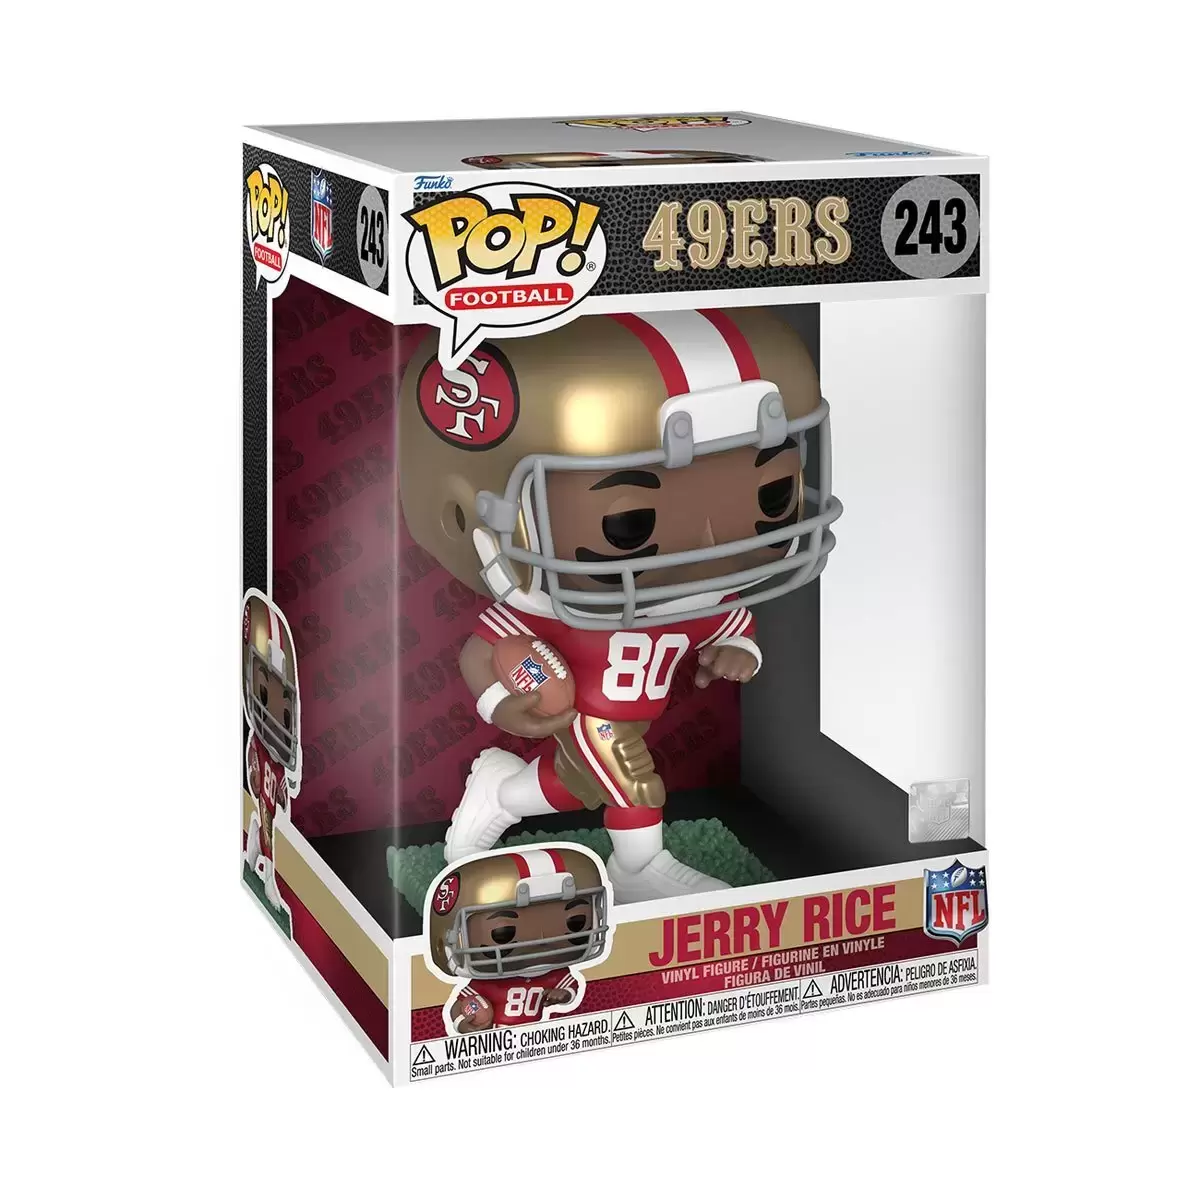 POP! Football (NFL) - NFL: San Francisco 49ers - Jerry Rice Jumbo